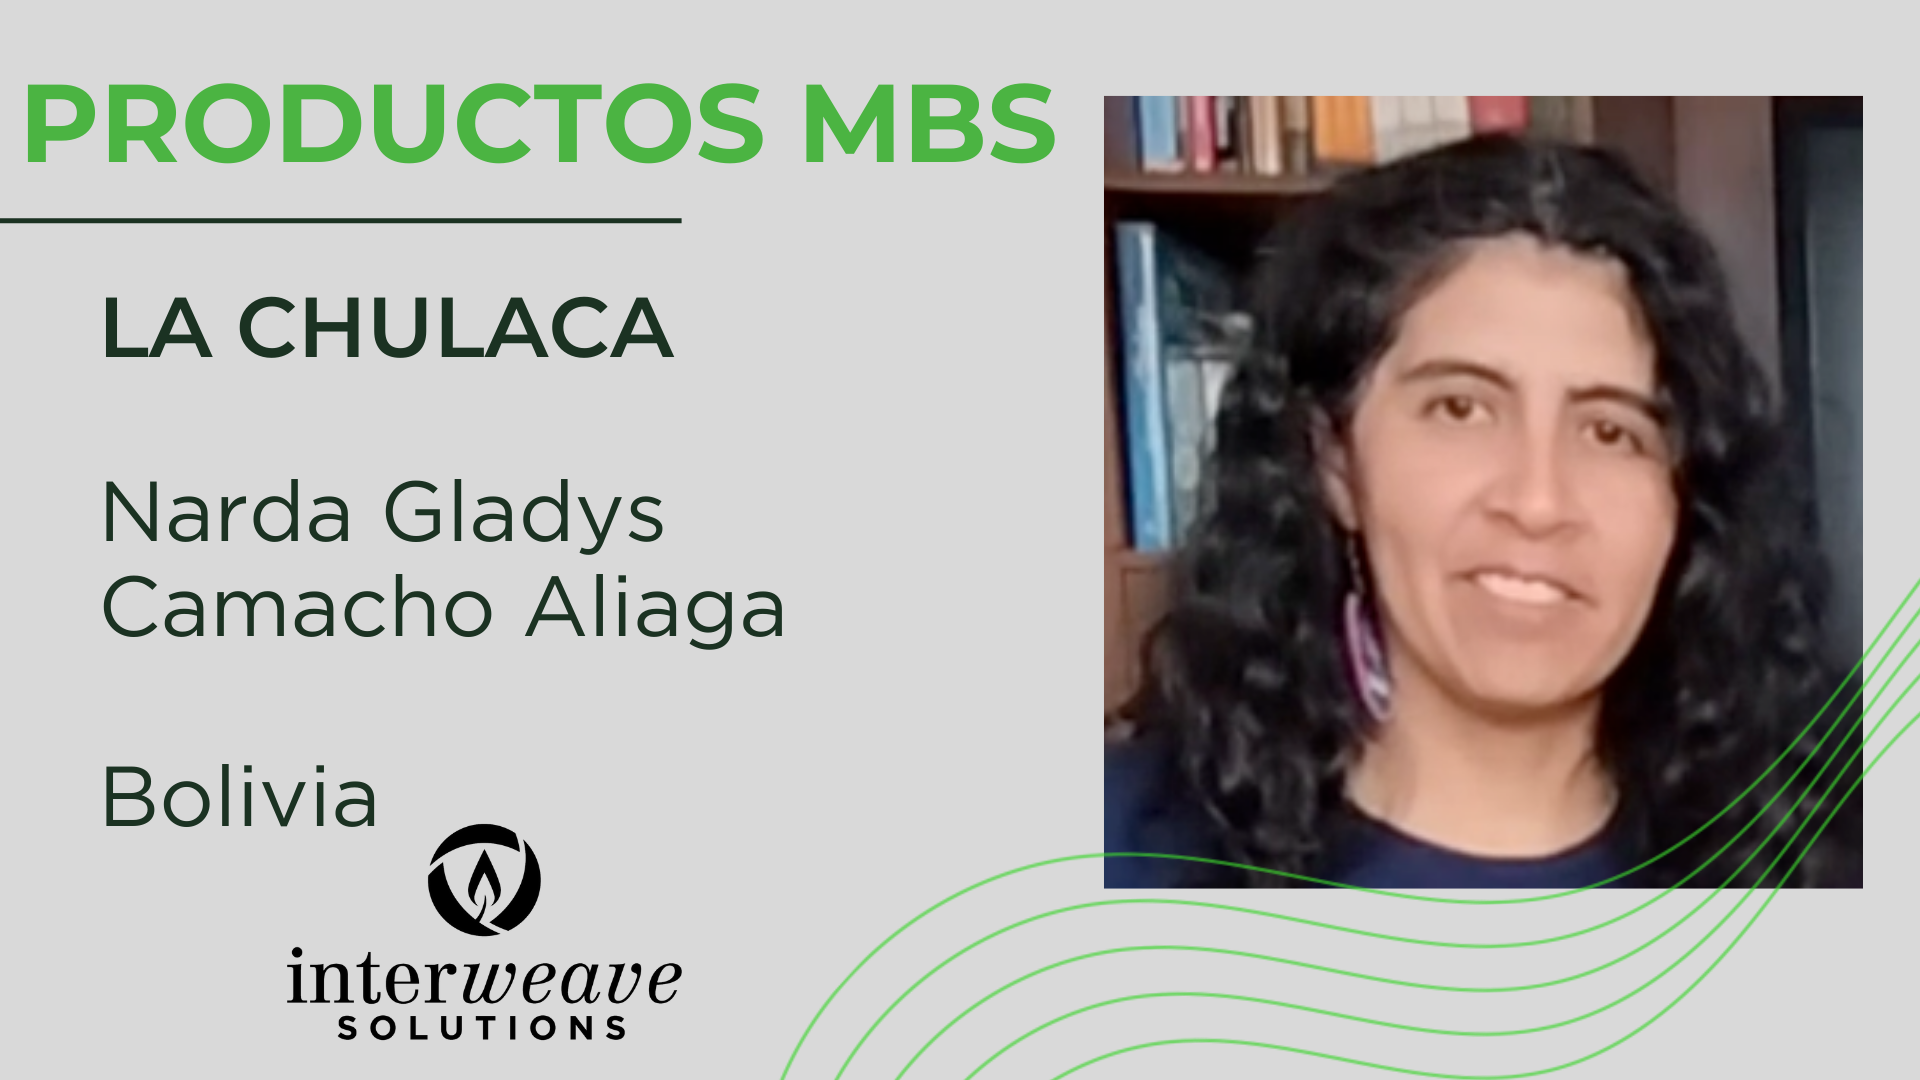 Narda Gladys Camacho Aliaga